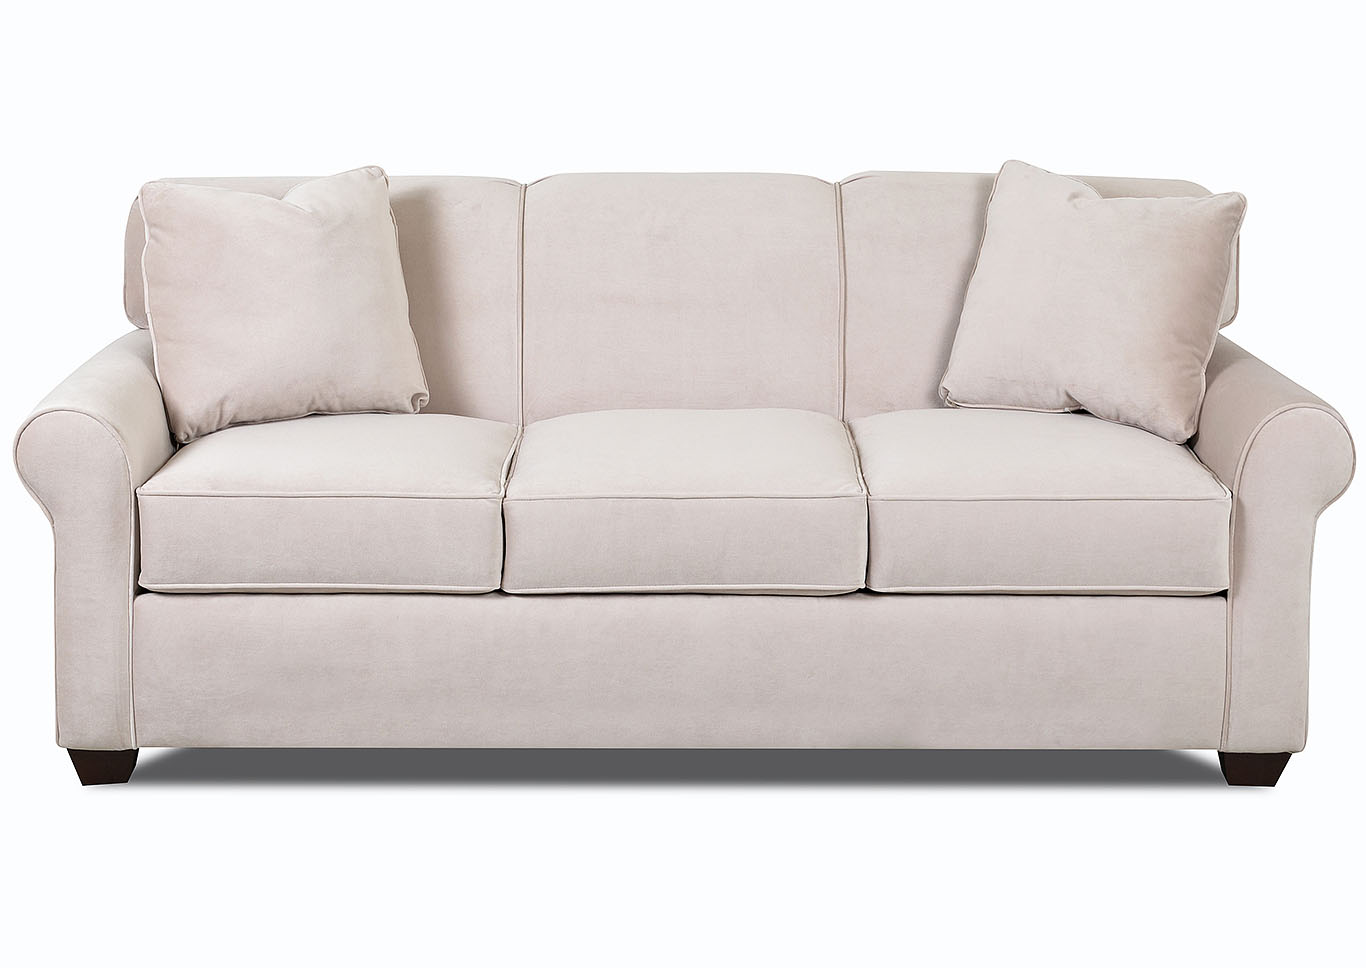 Mayhew Belsire Buckwheat Sleeper Fabric Sofa,Klaussner Home Furnishings